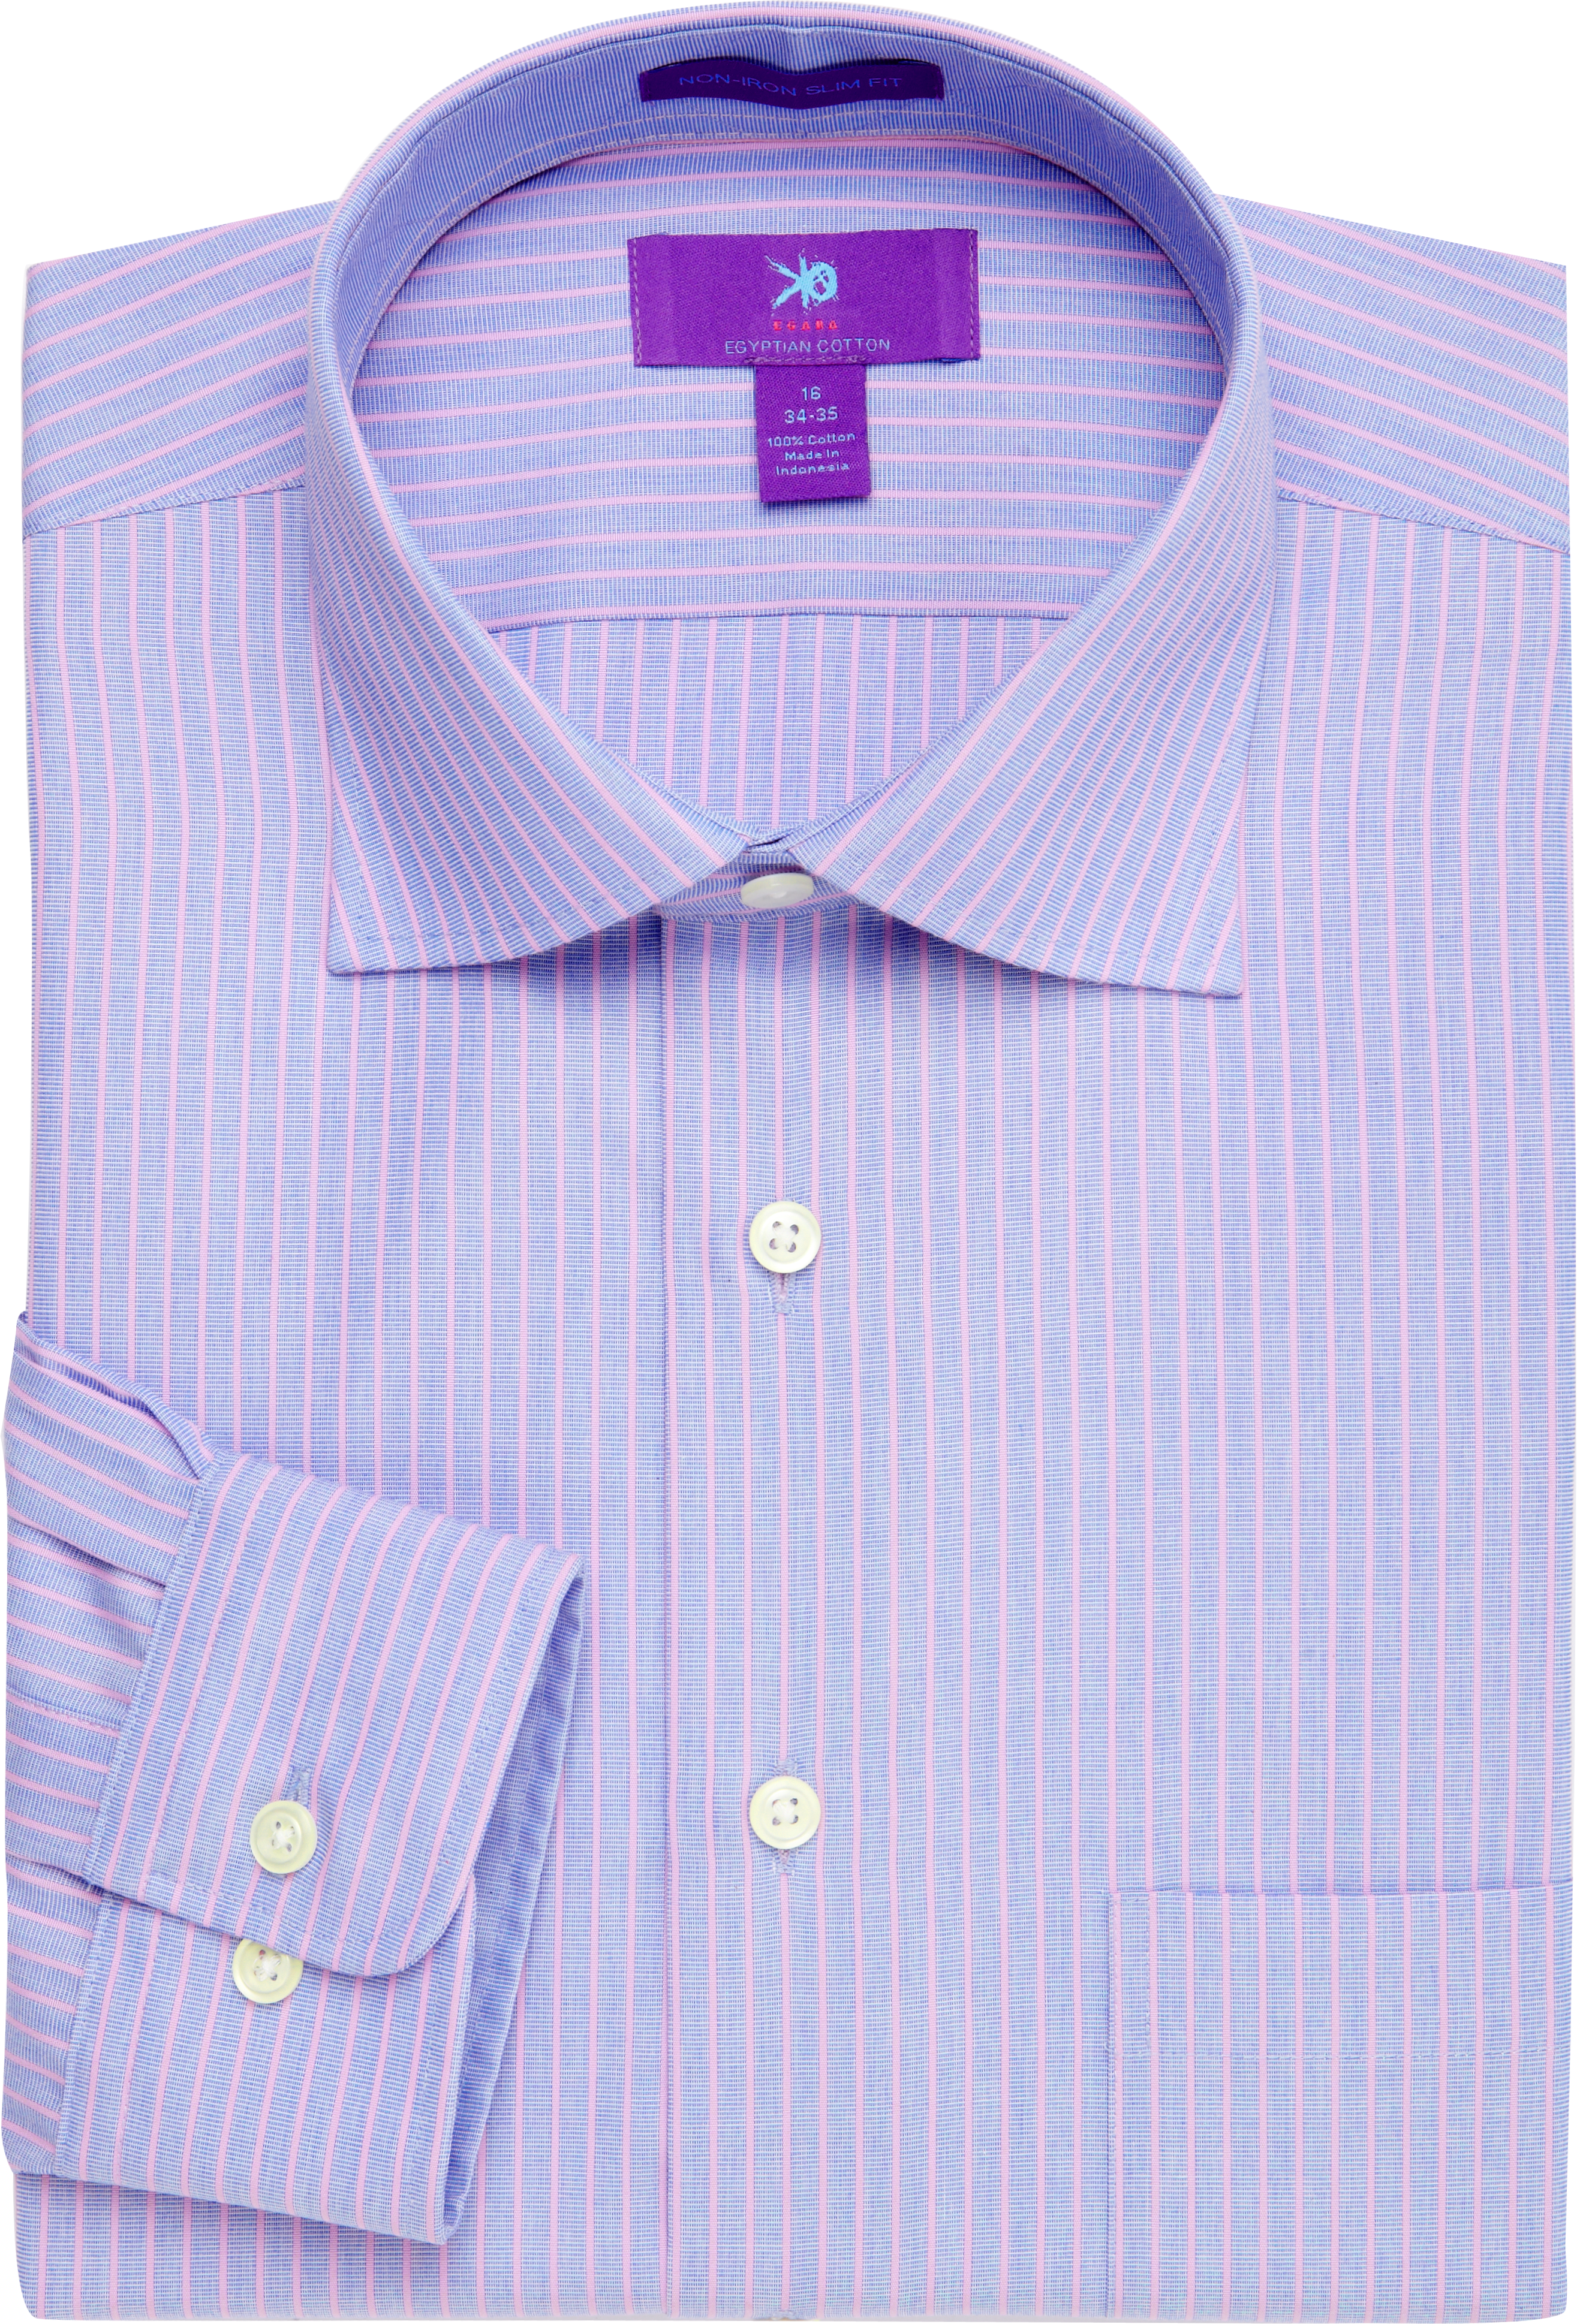 Egara Blue and Pink Stripe Slim Fit Dress Shirt - Men's Sale | Men's ...